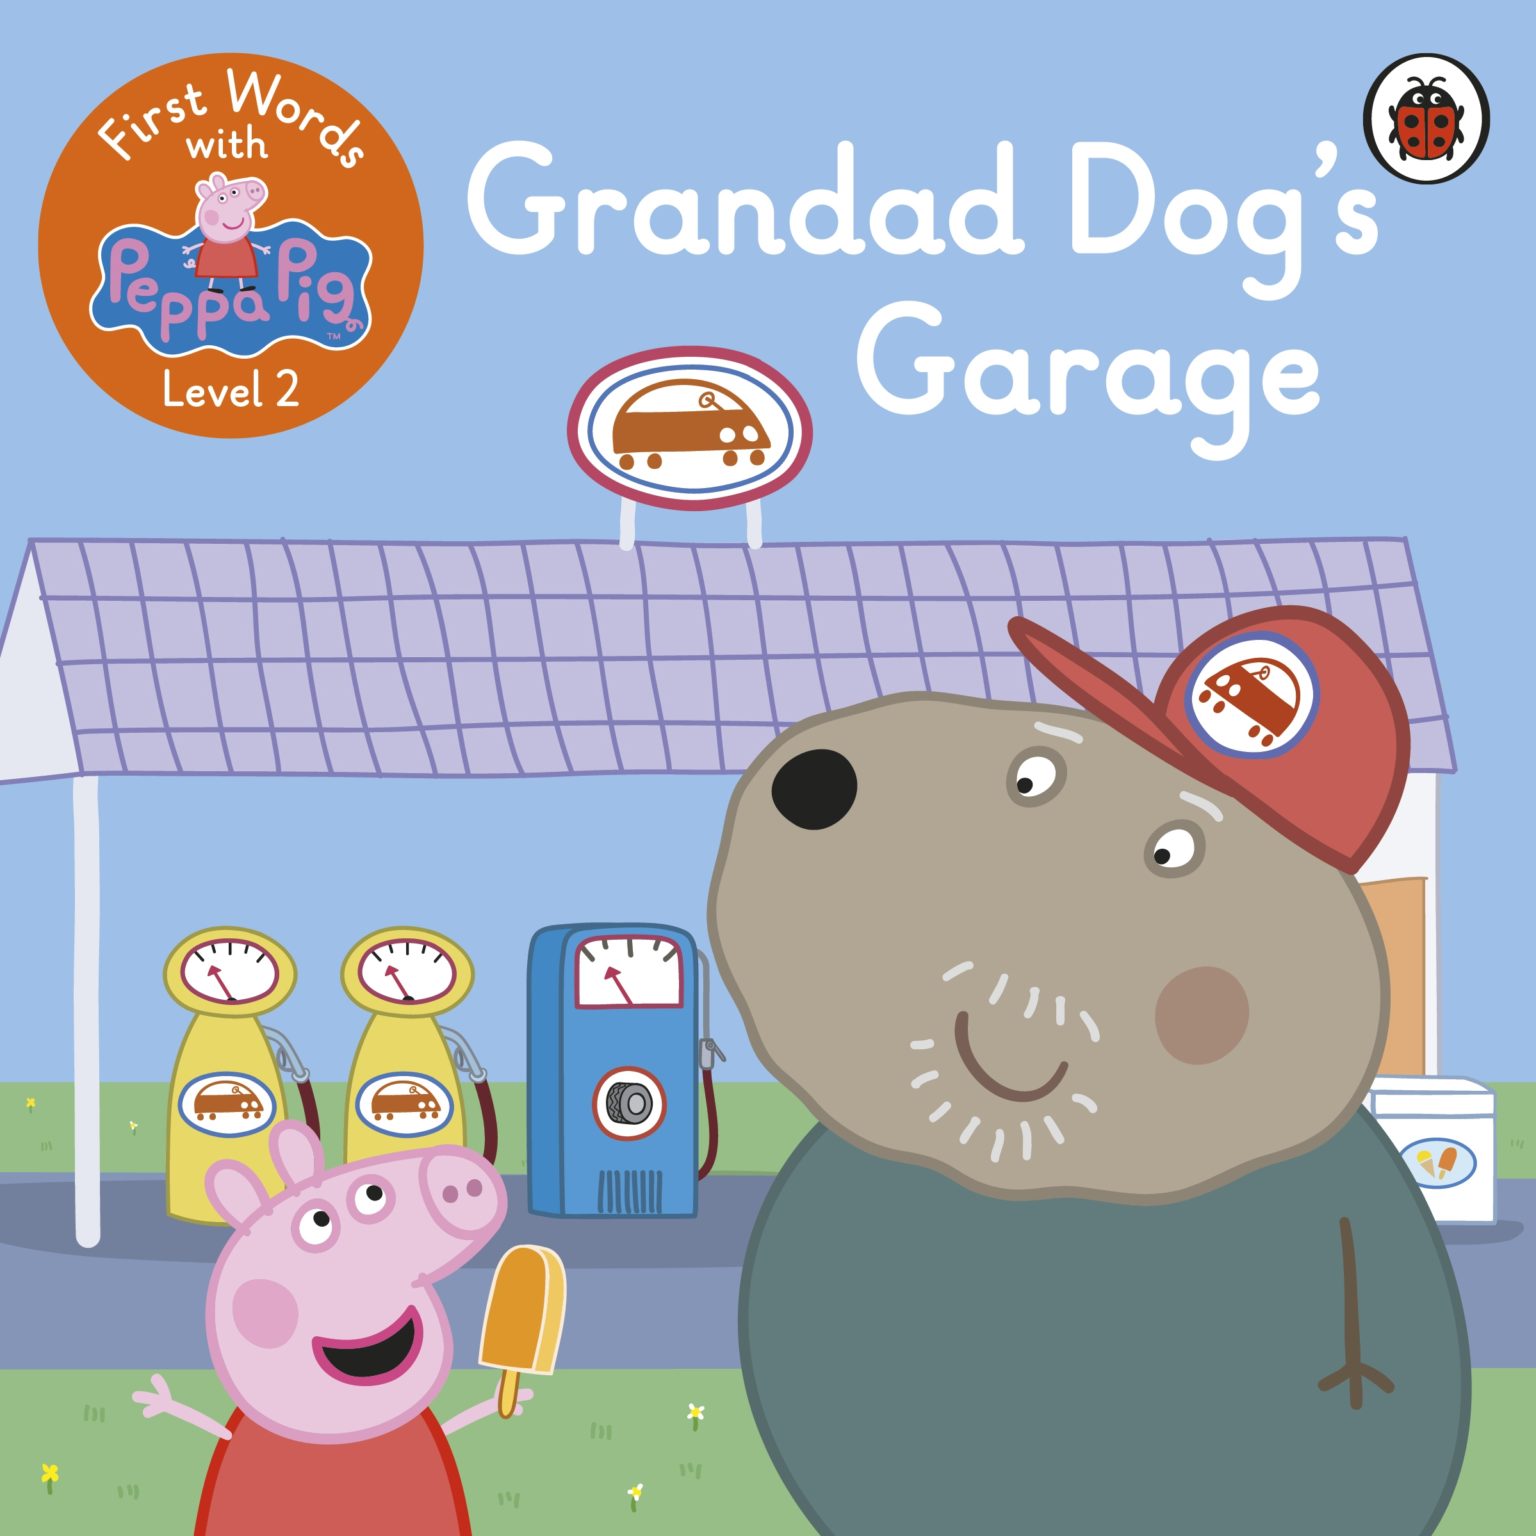 First Words with Peppa Pig: Level 2 Grandad Dog’s Garage